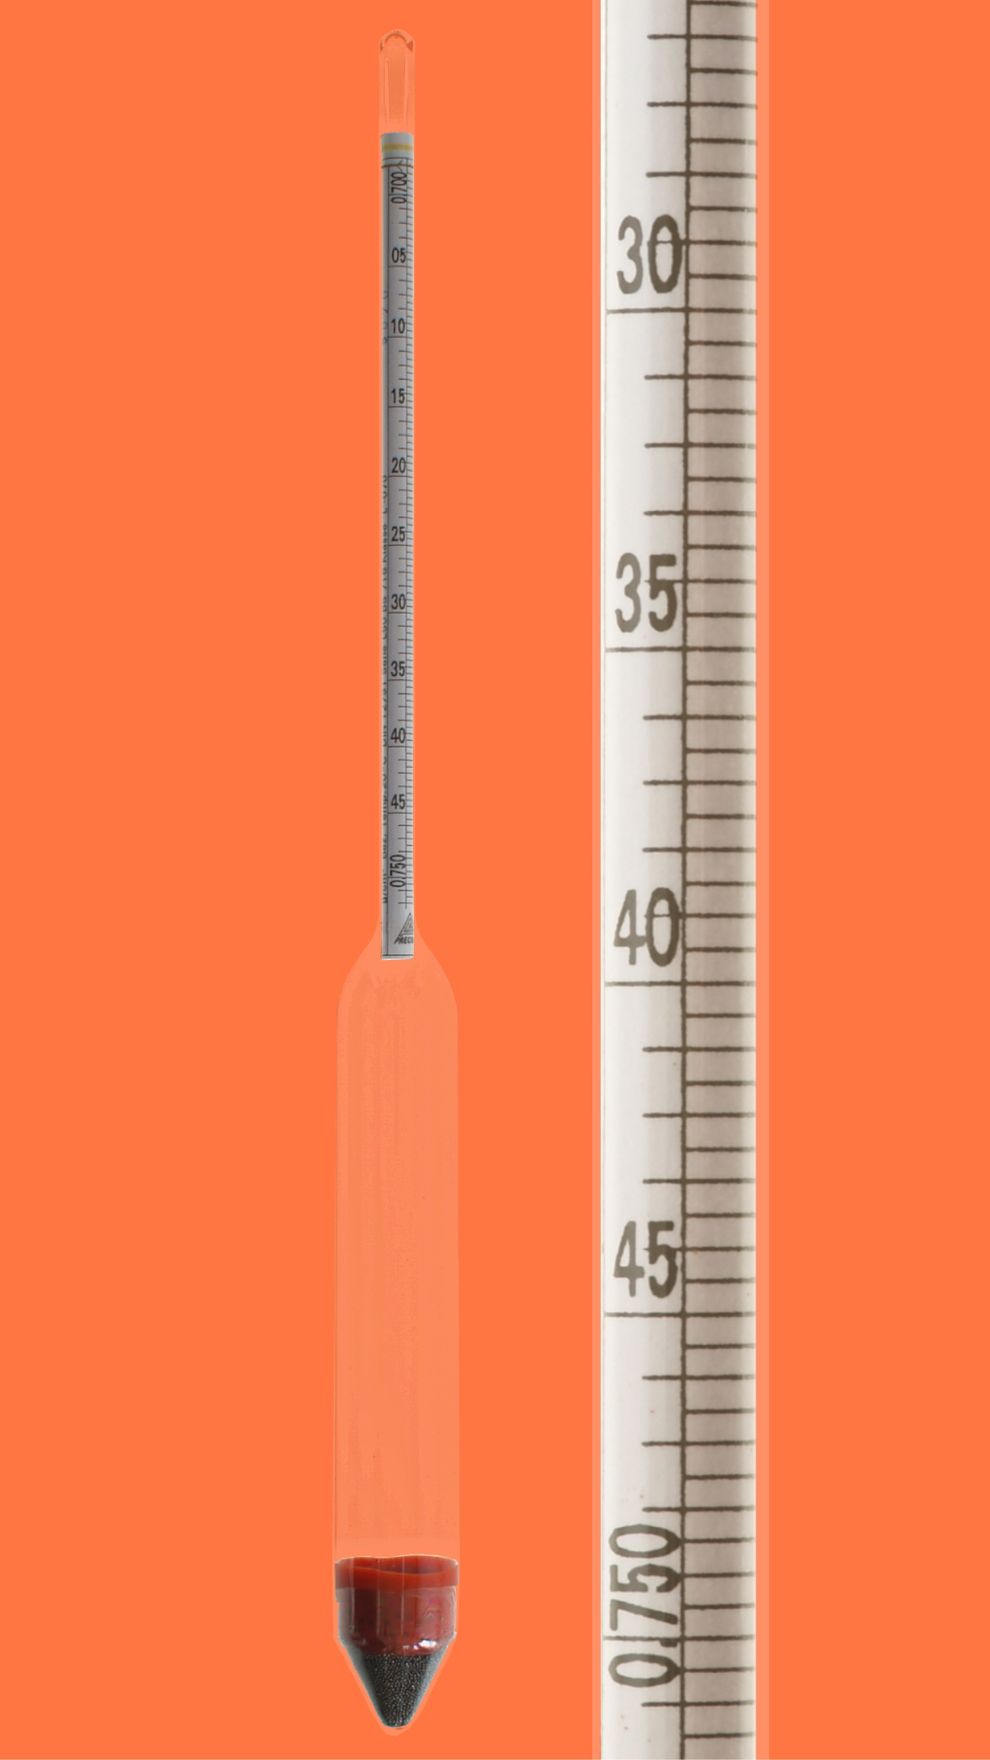 Aräometer, DIN 12791, L50, 1,85-1,90:0,0005g/cm³, Bezugstemp. 20°C, ohne Thermometer